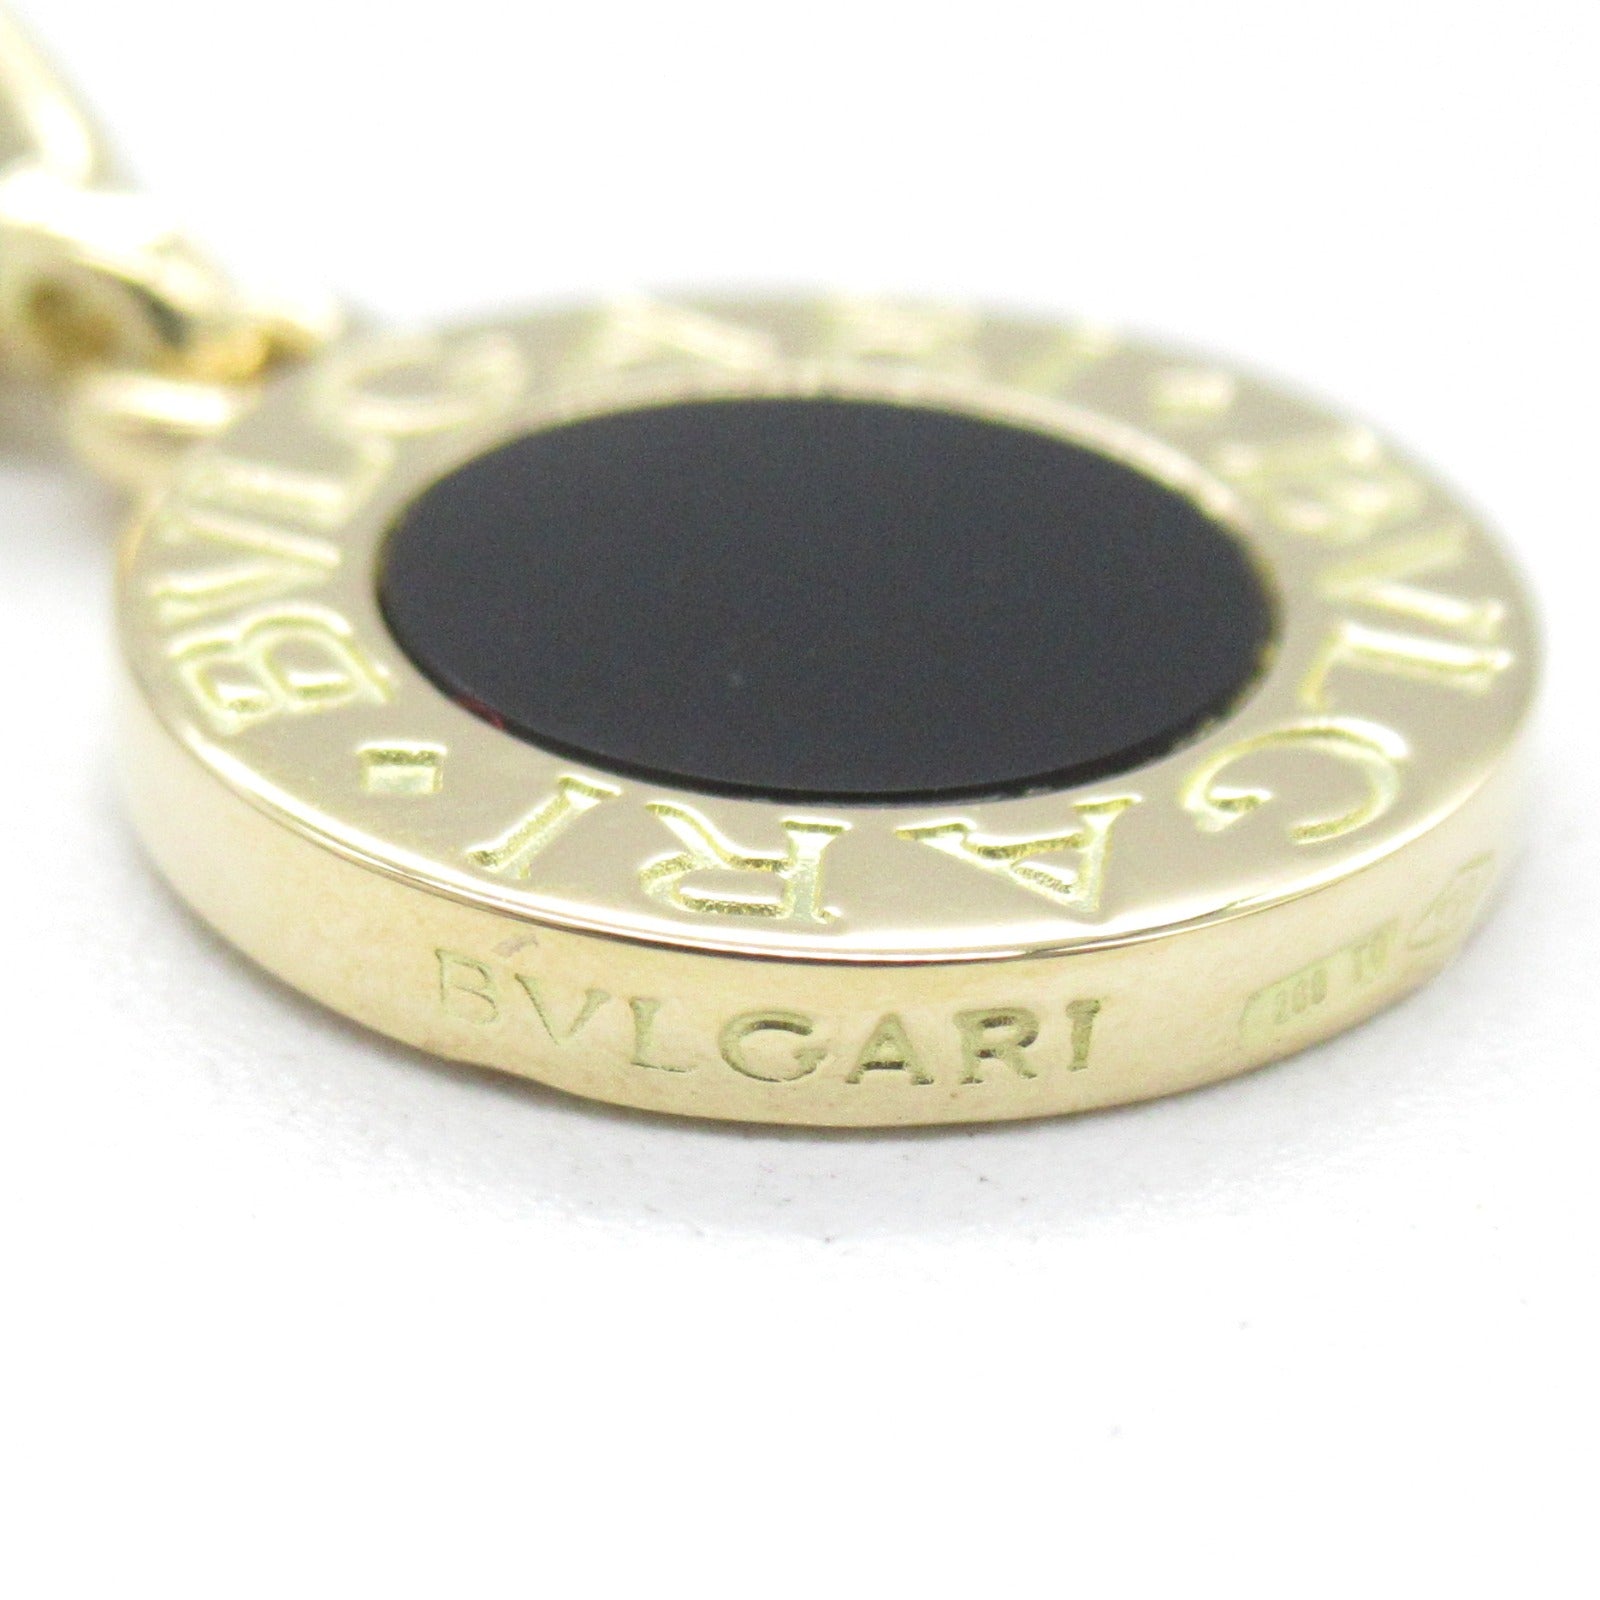 Bulgari BVLGARI n Onyx Charm Pendant Top Jewelry K18 (yellow g) Onyx   Black